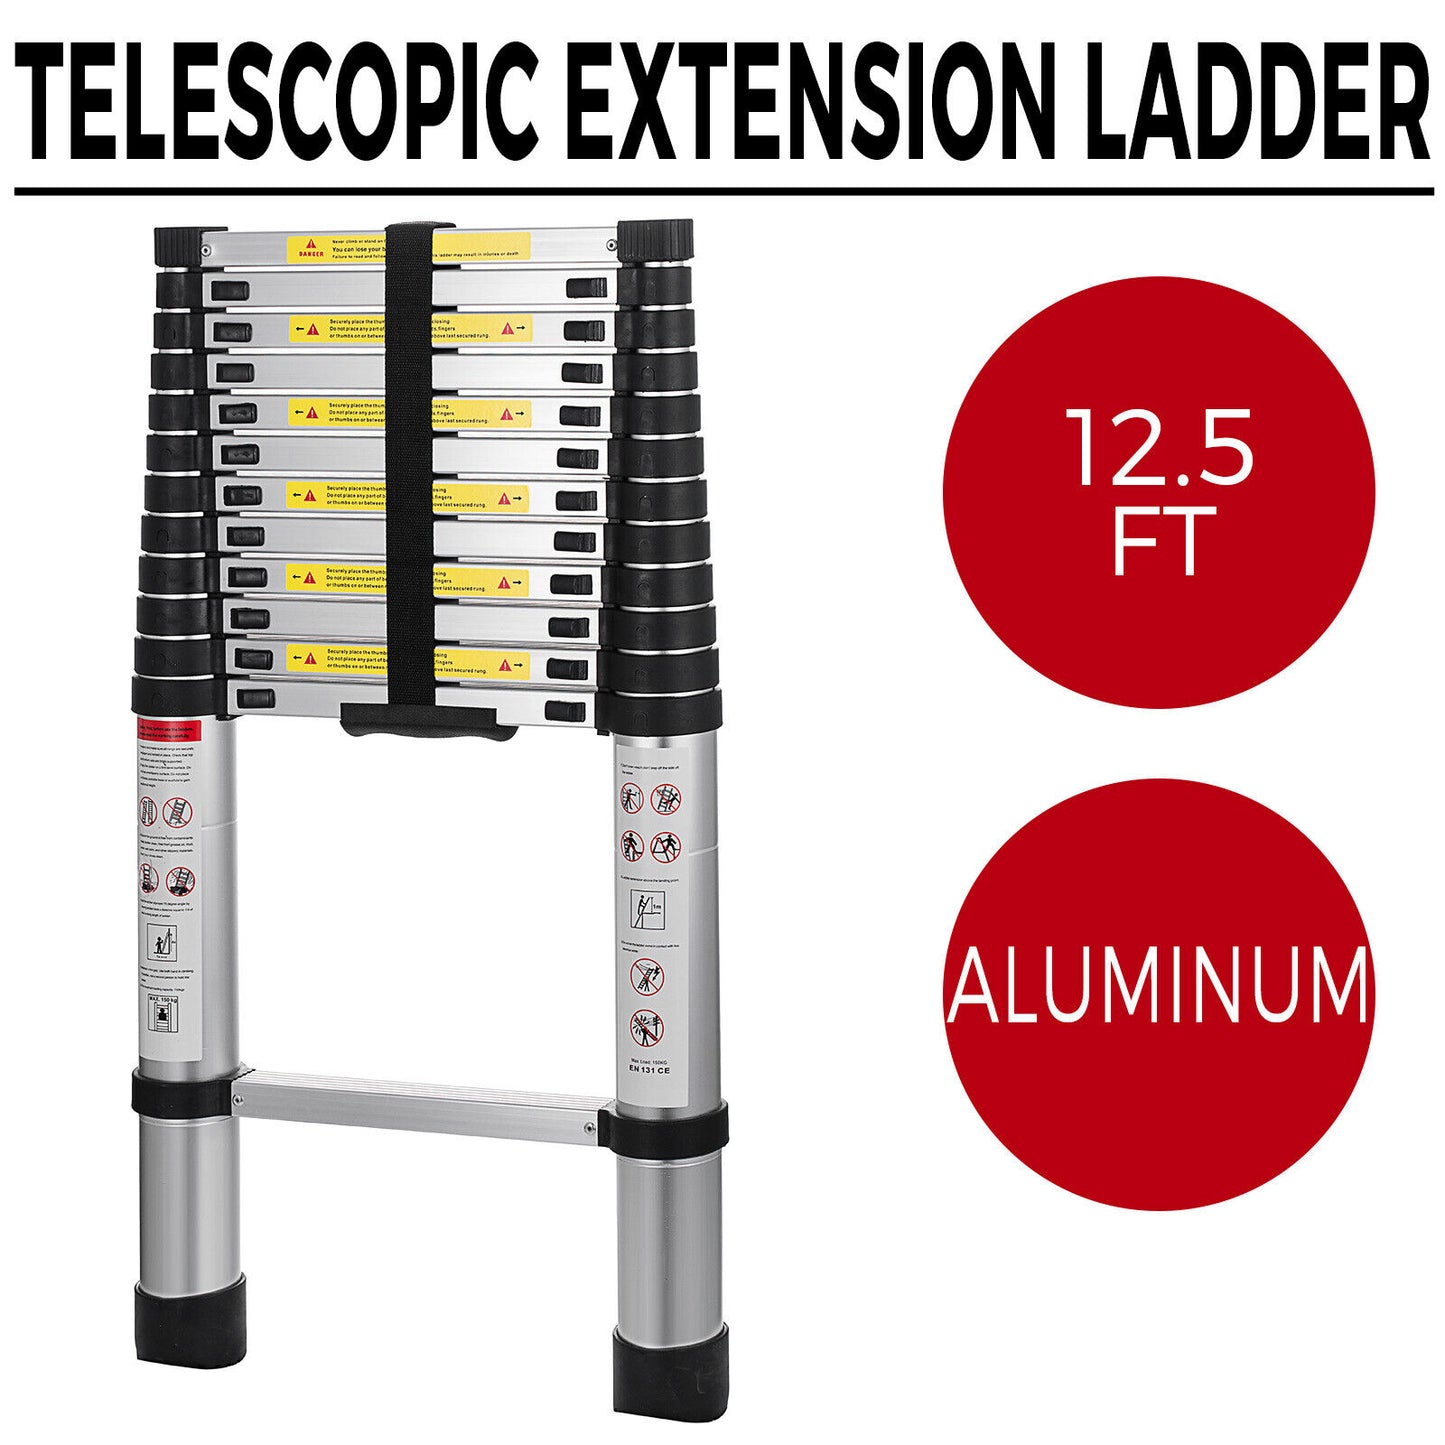 12.5ft Aluminum Folding Telescopic Extension Ladder Heavy Multi Purpose Step